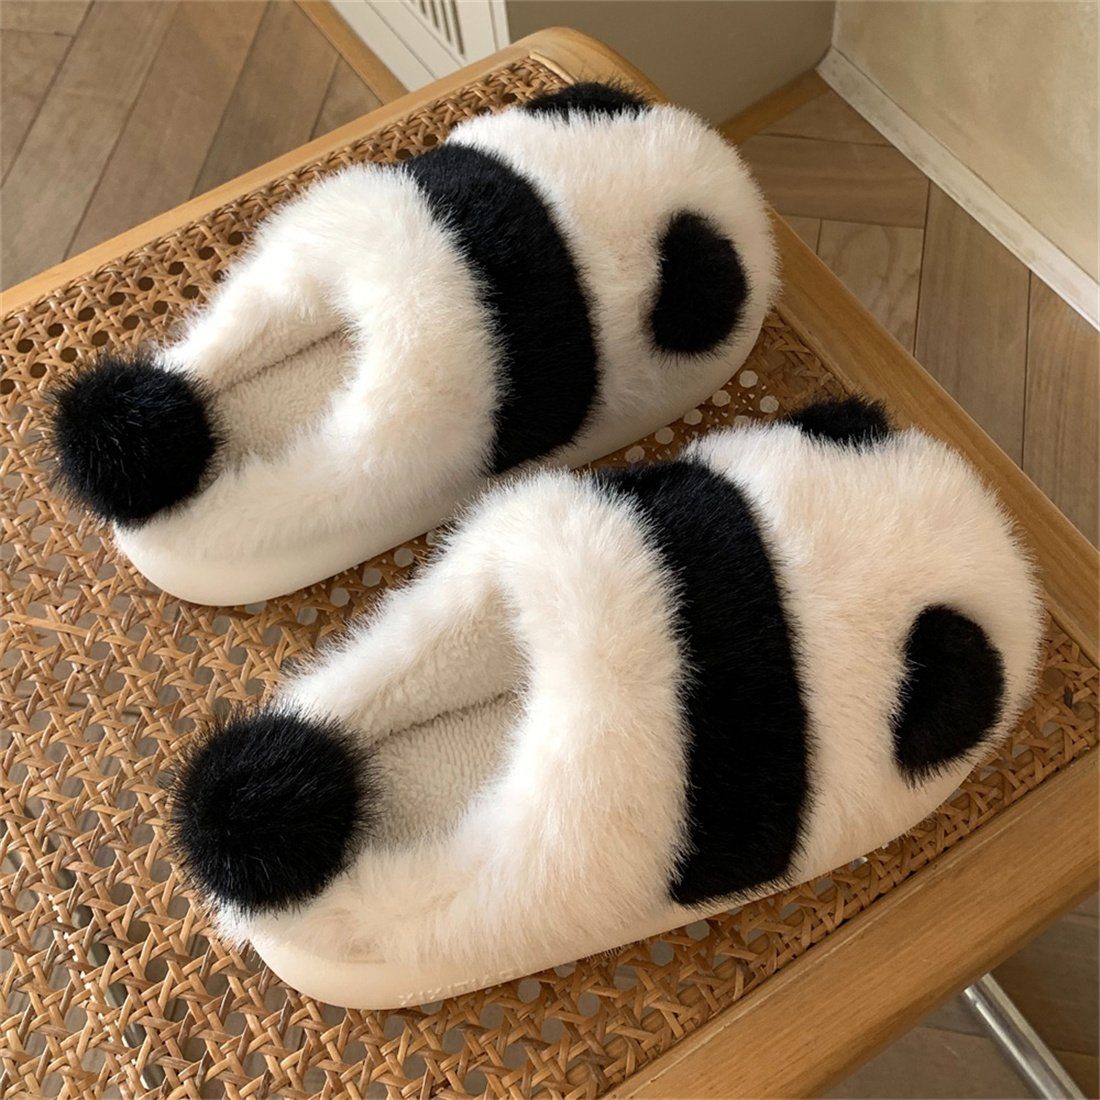 Plüsch DÖRÖY Baumwolle Winter Panda Hausschuhe Plüsch Baumwolle Warme Damen Schuhe Hausschuhe,